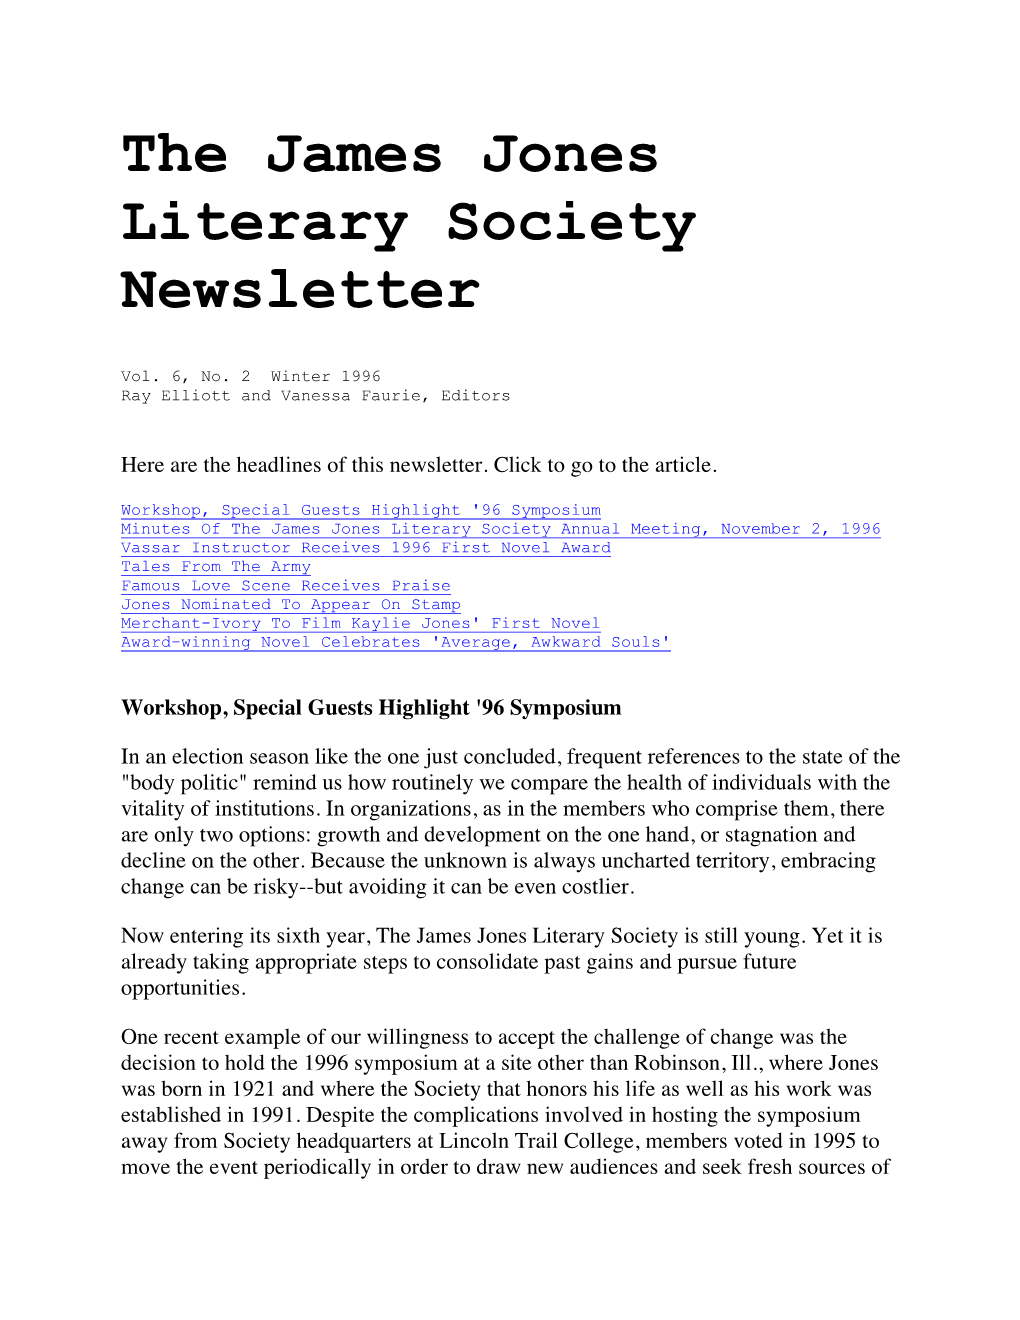 The James Jones Literary Society Newsletter